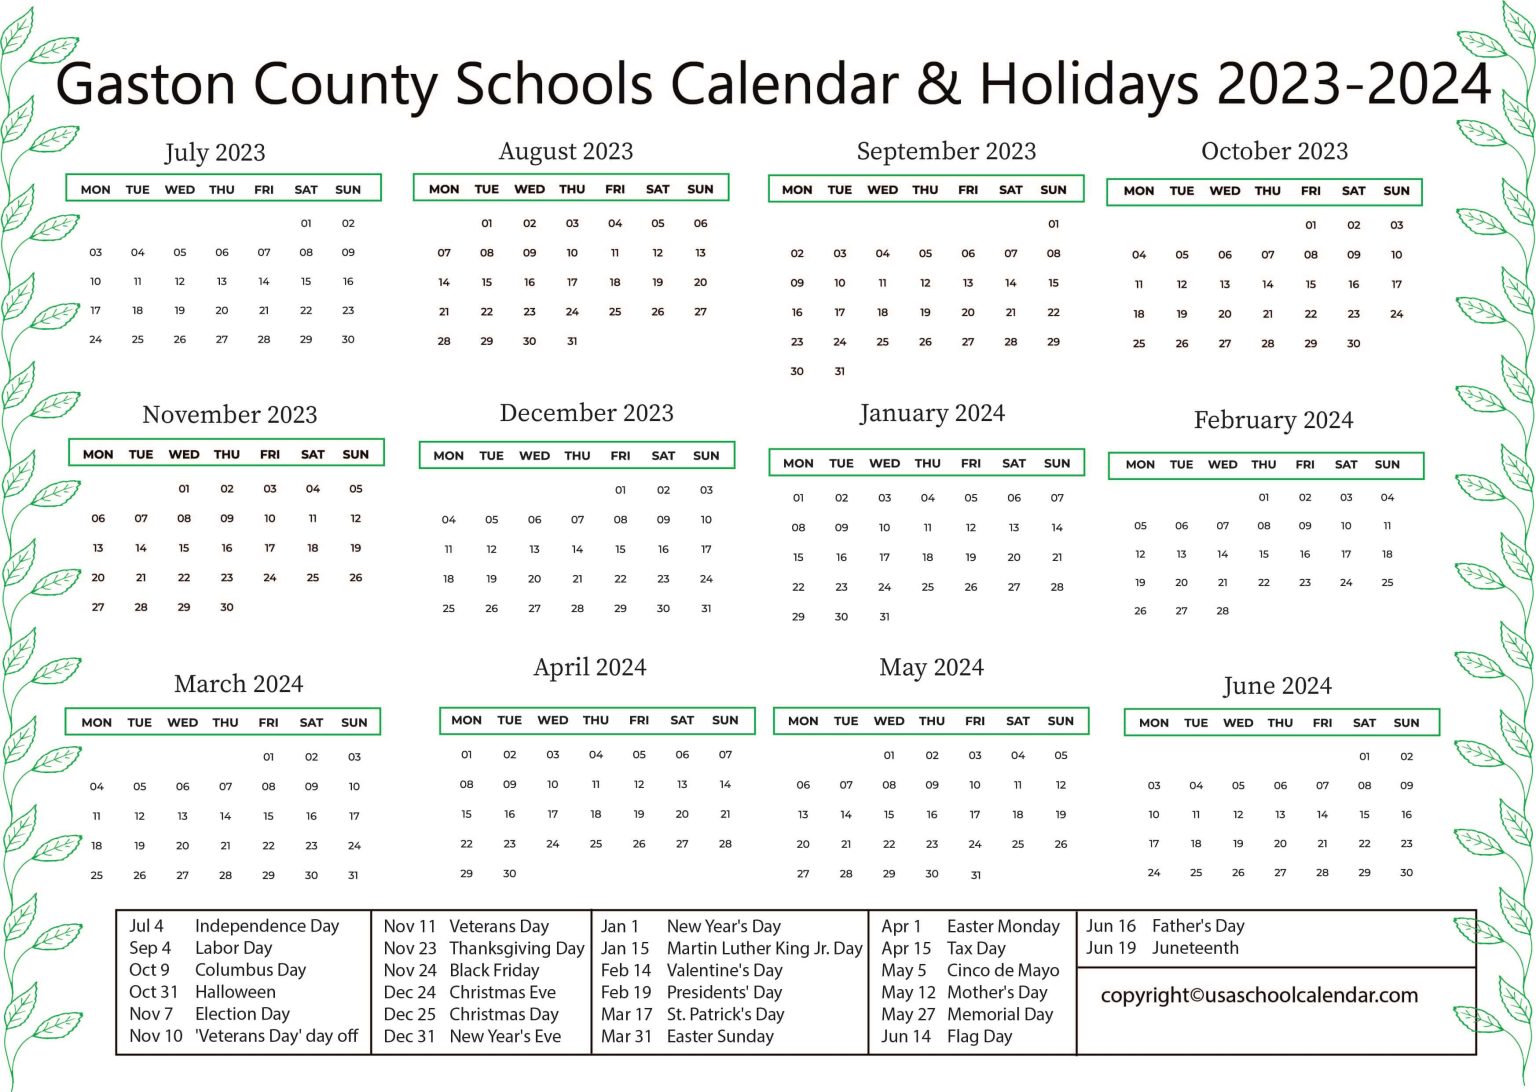 Gaston County Schools Calendar & Holidays 2023-2024